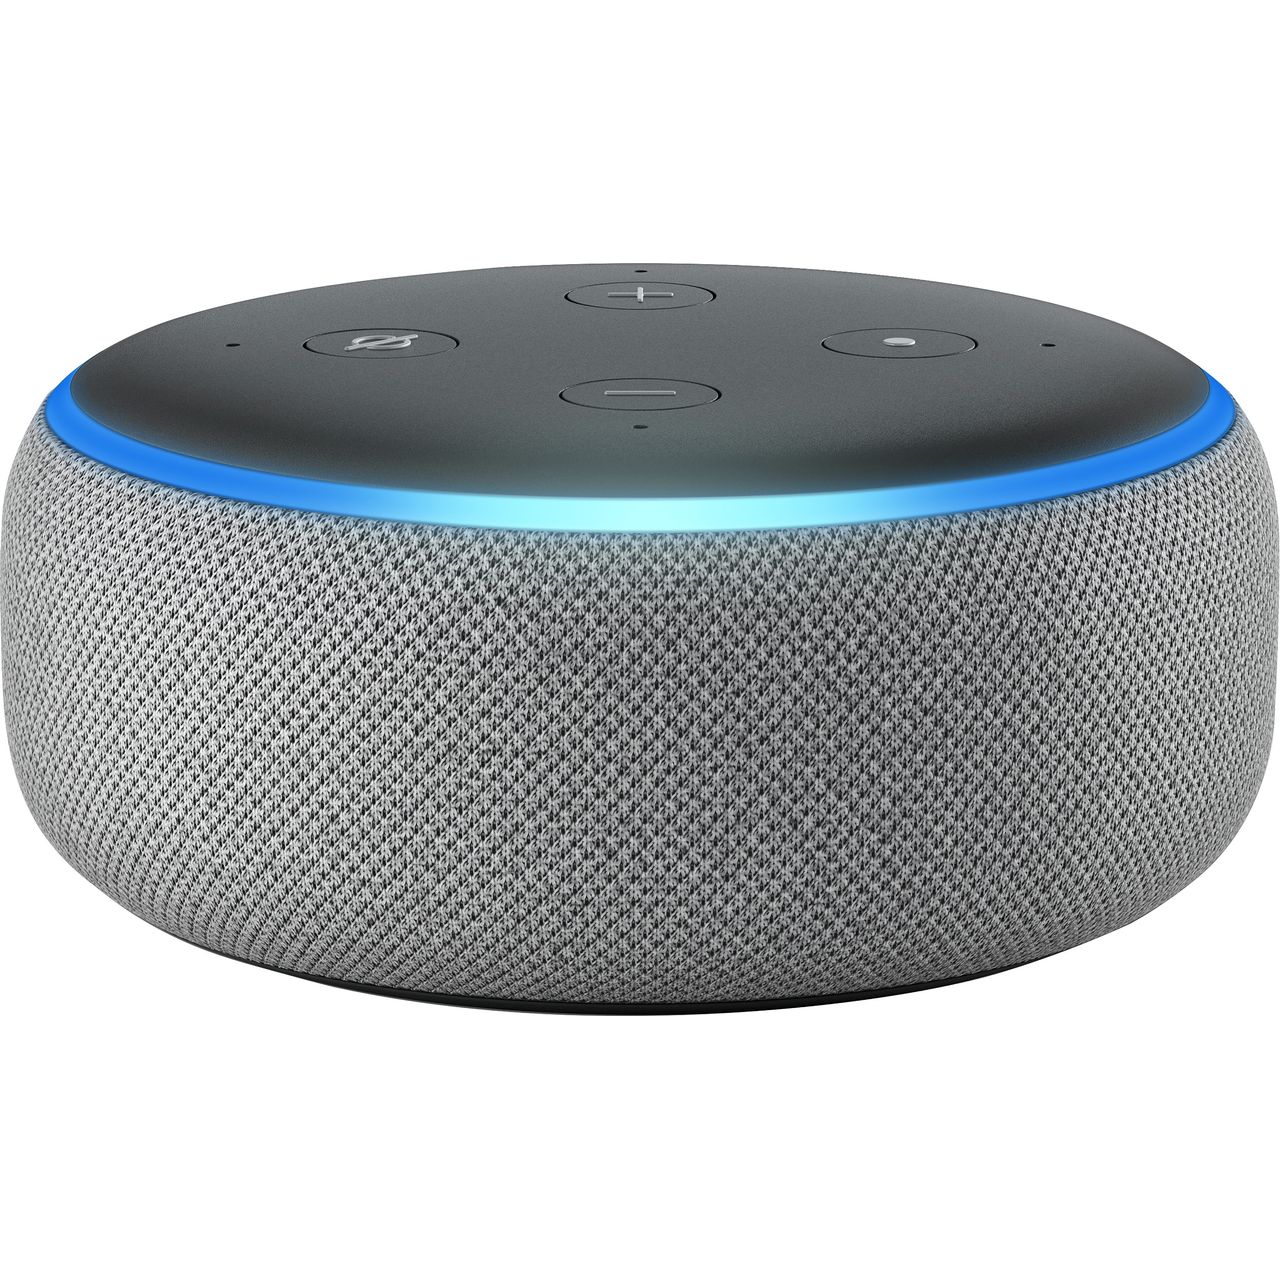 Amazon Echo Dot (3rd Gen) Smart Speaker with Alexa Review